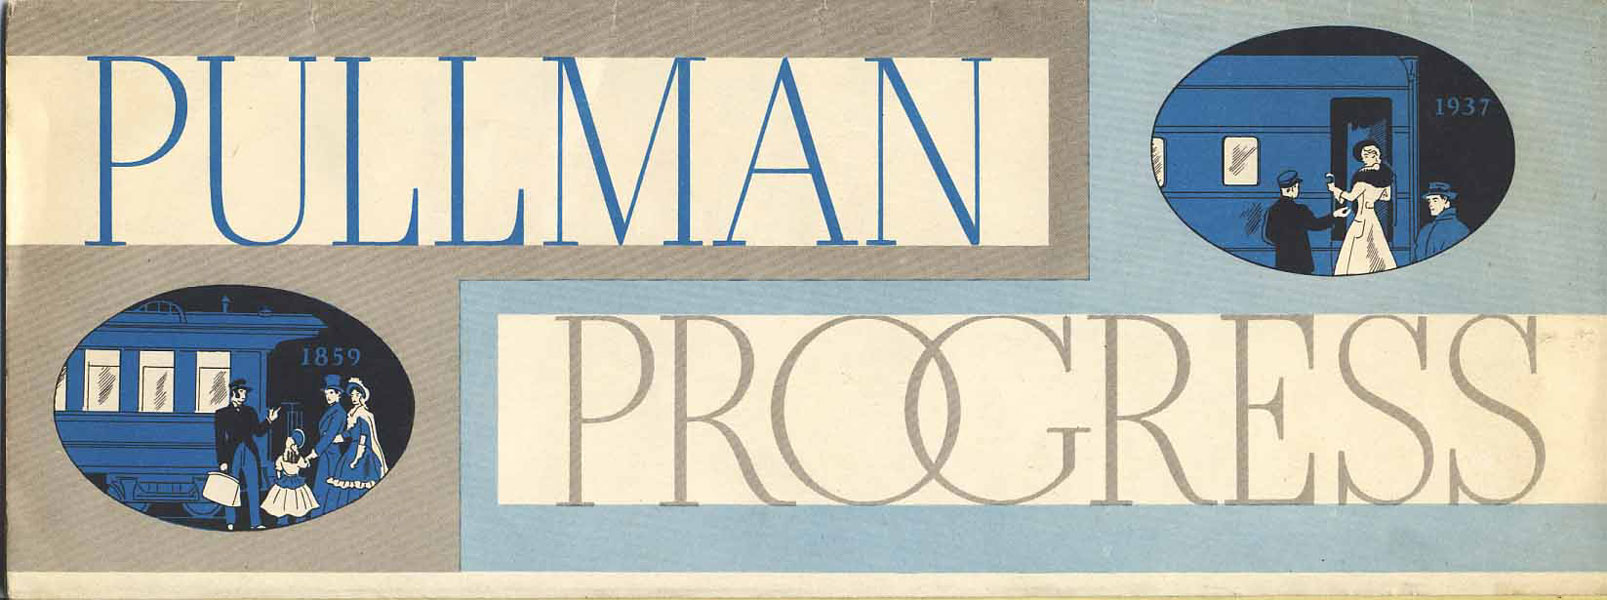 Pullman Progress. 1859 - 1937 The Pullman Company, Chicago, Illinois